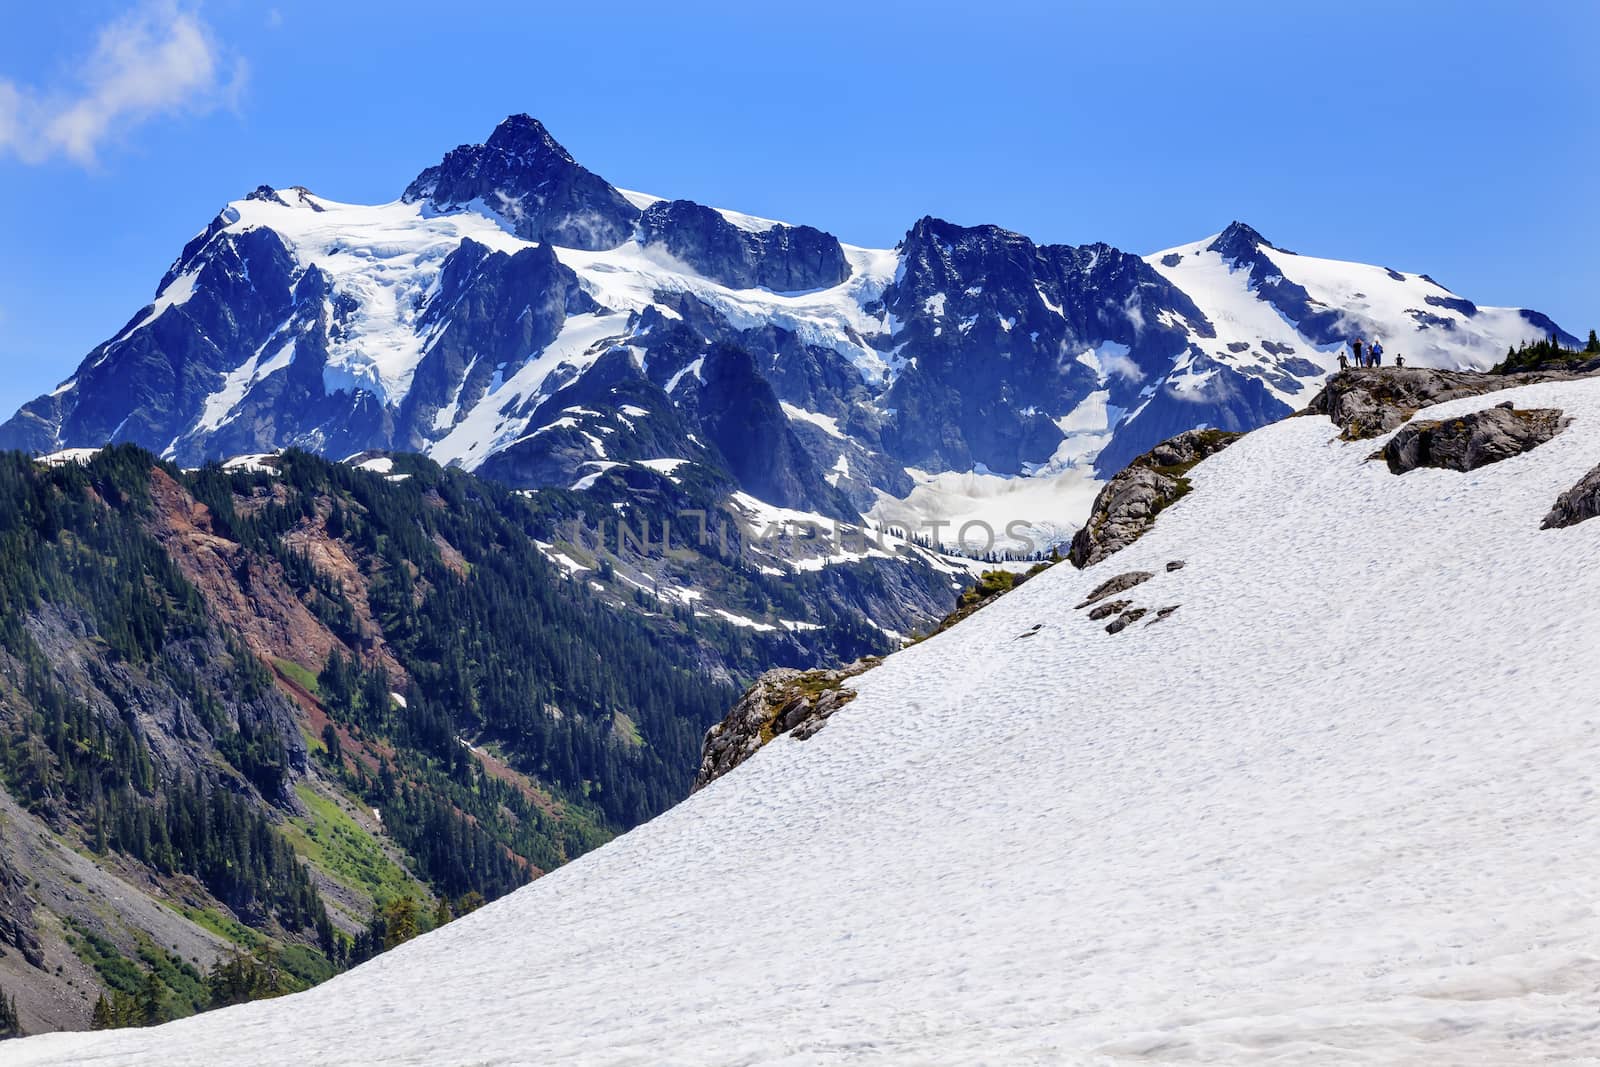 Hiking Snowfields Artist Point Glaciers Mount Shuksan Washington by bill_perry